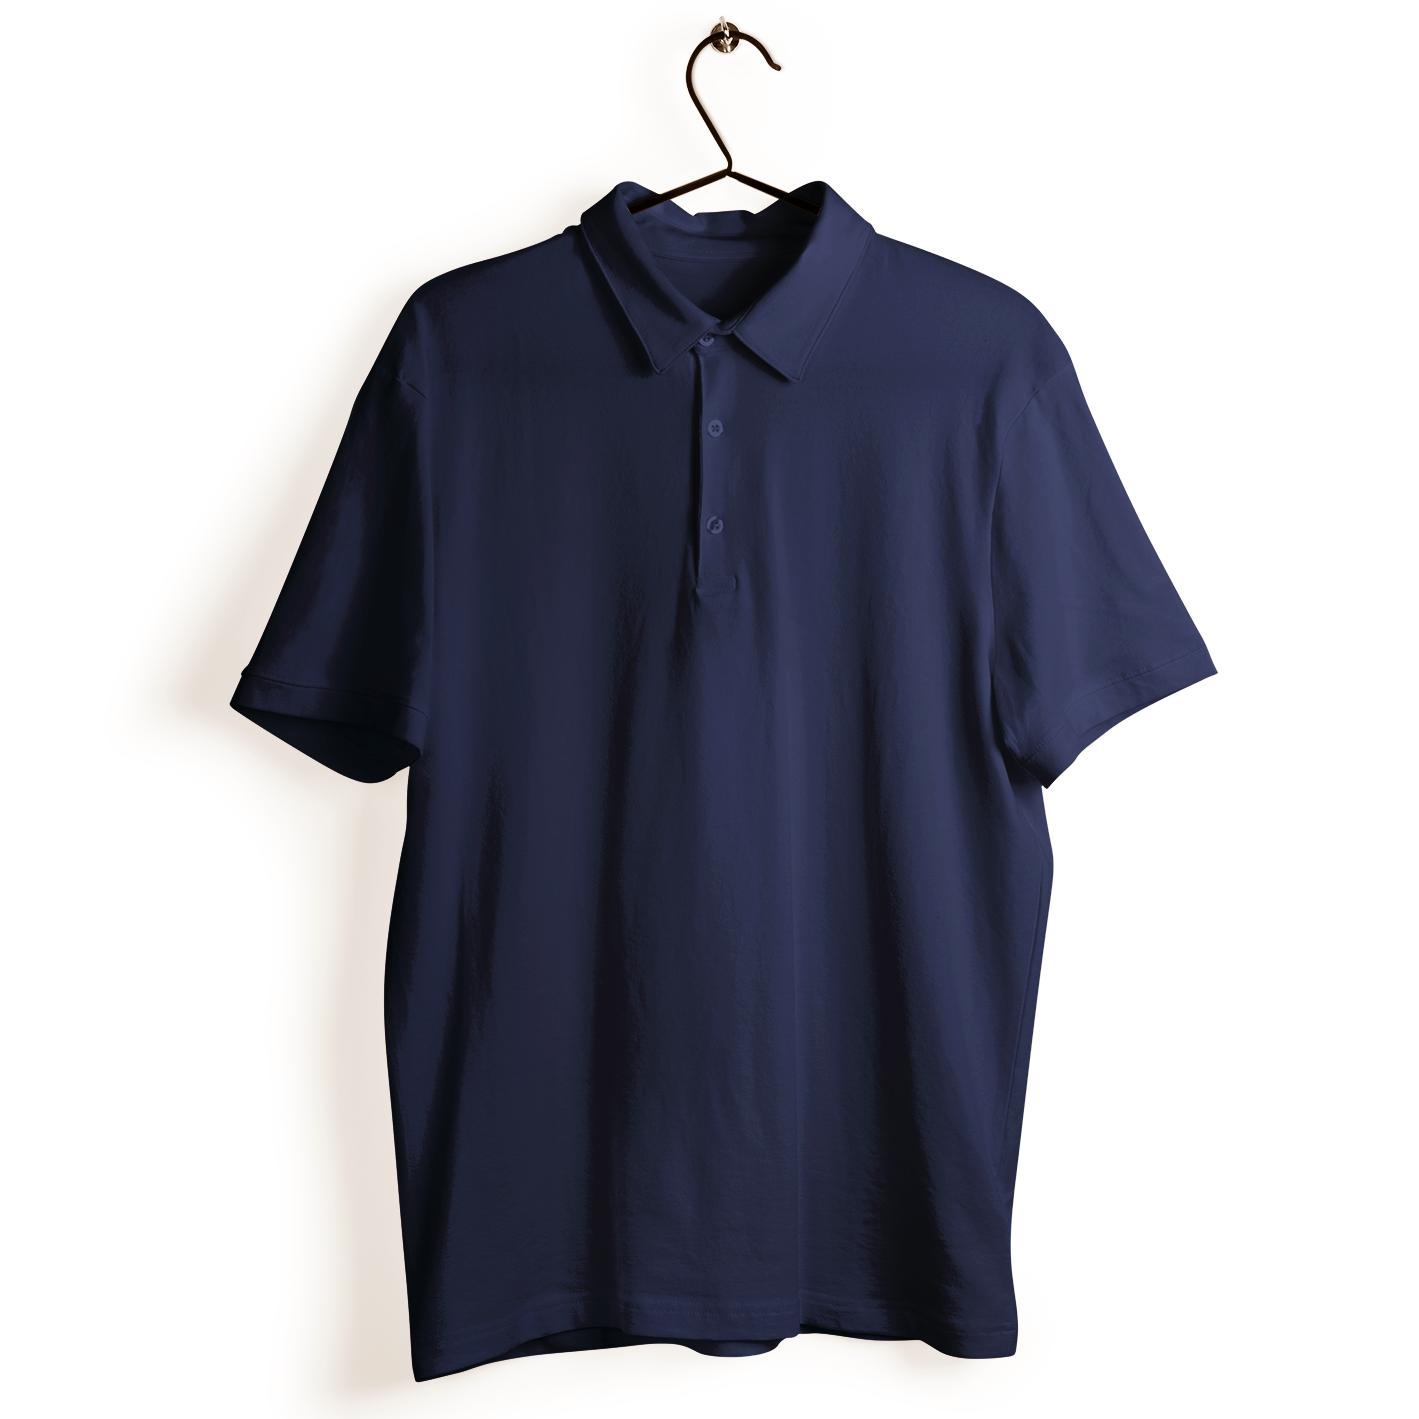 Navy Blue Polo T-shirt The Banyan Tee